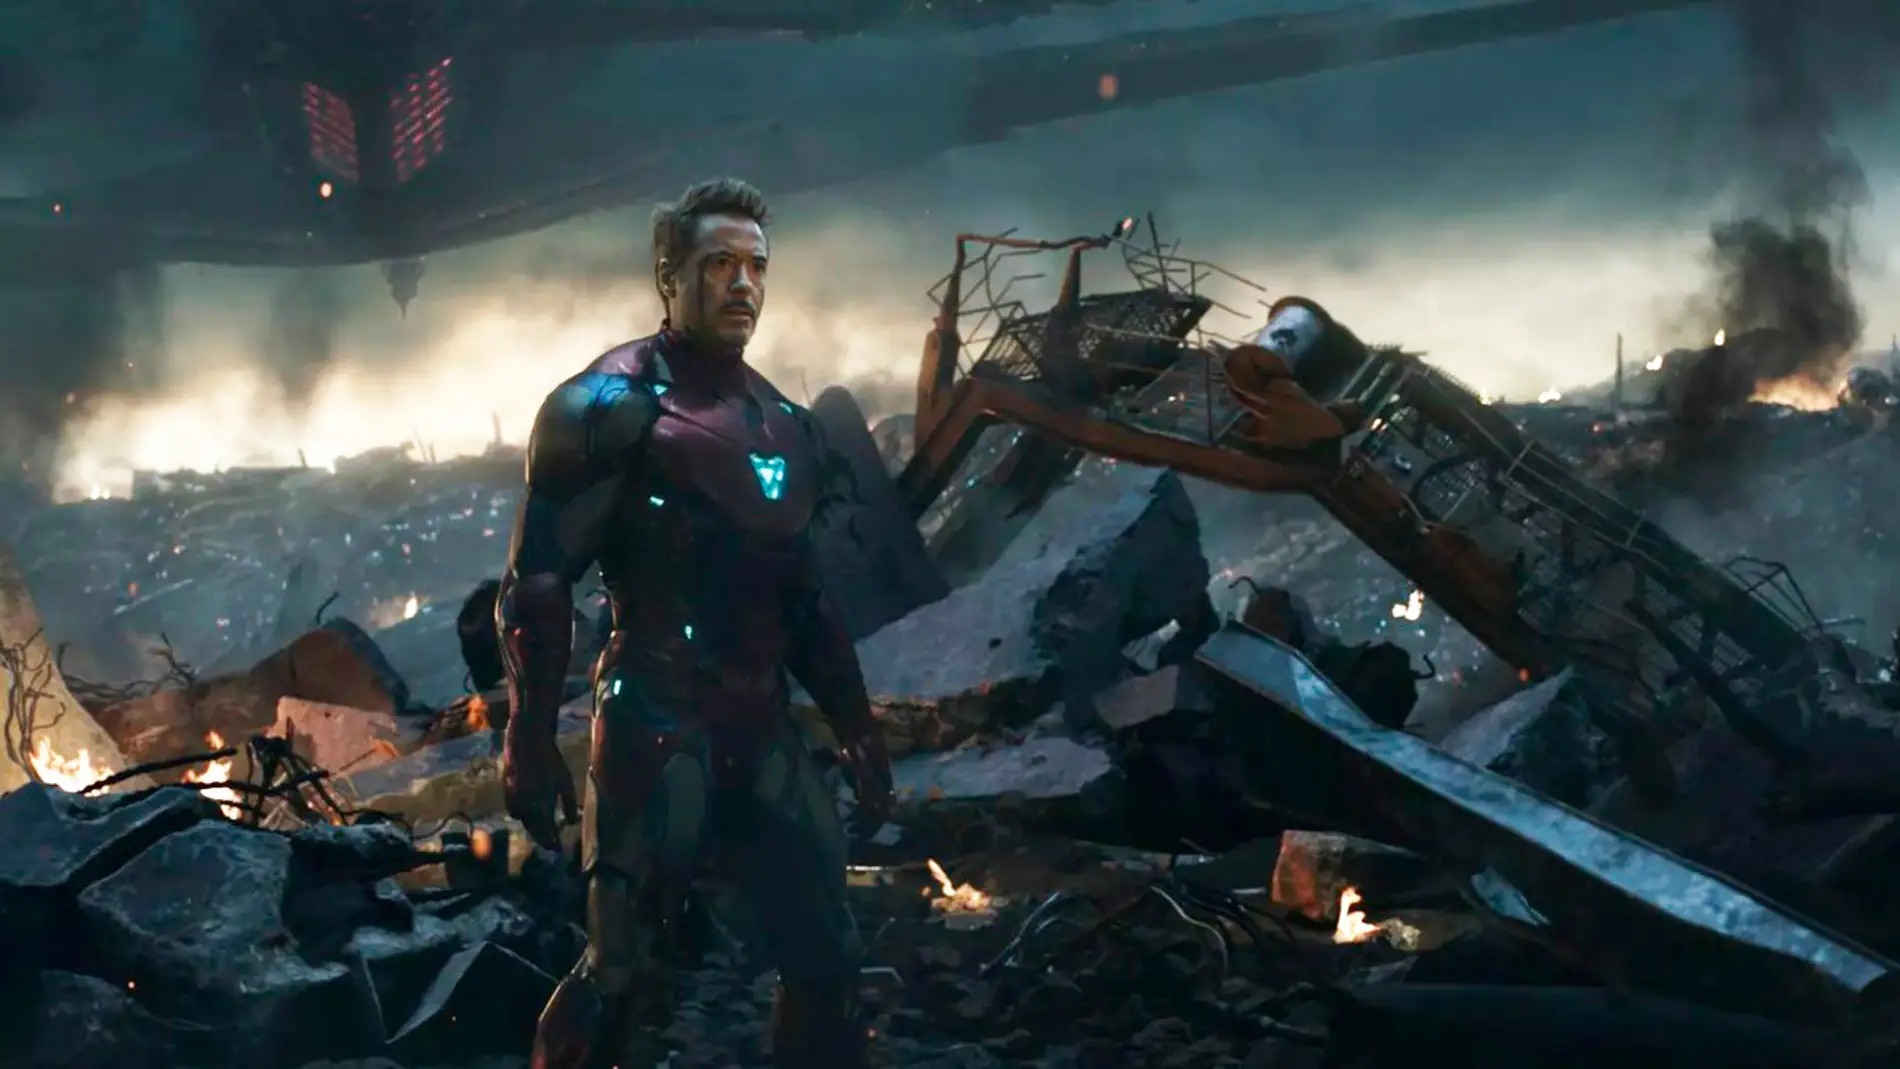 Iron Man en una escena de 'Vengadores: Endgame'